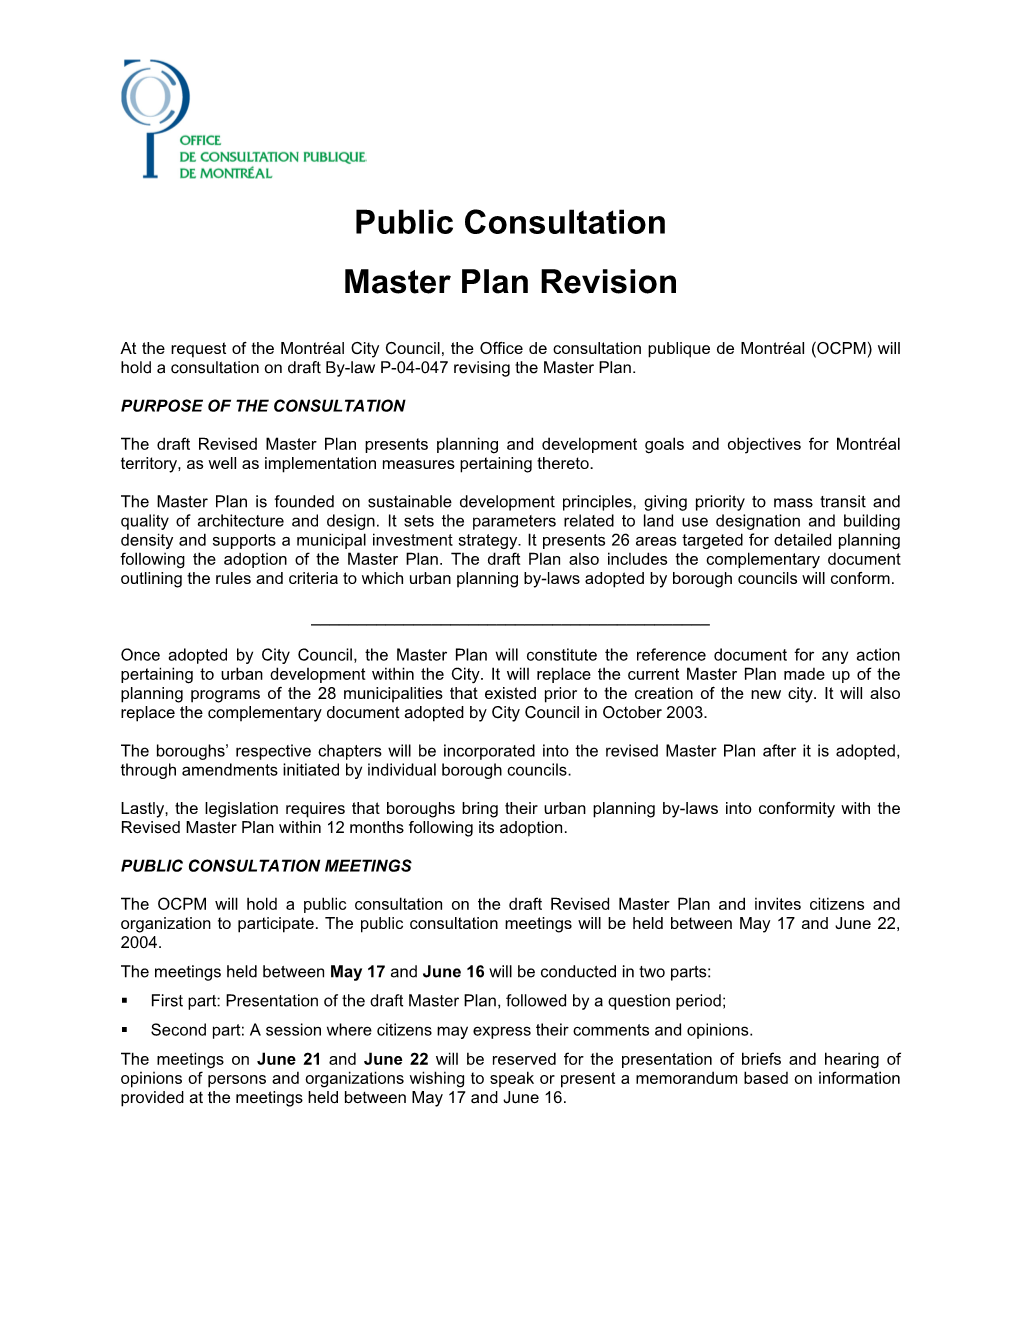 Public Consultation Master Plan Revision